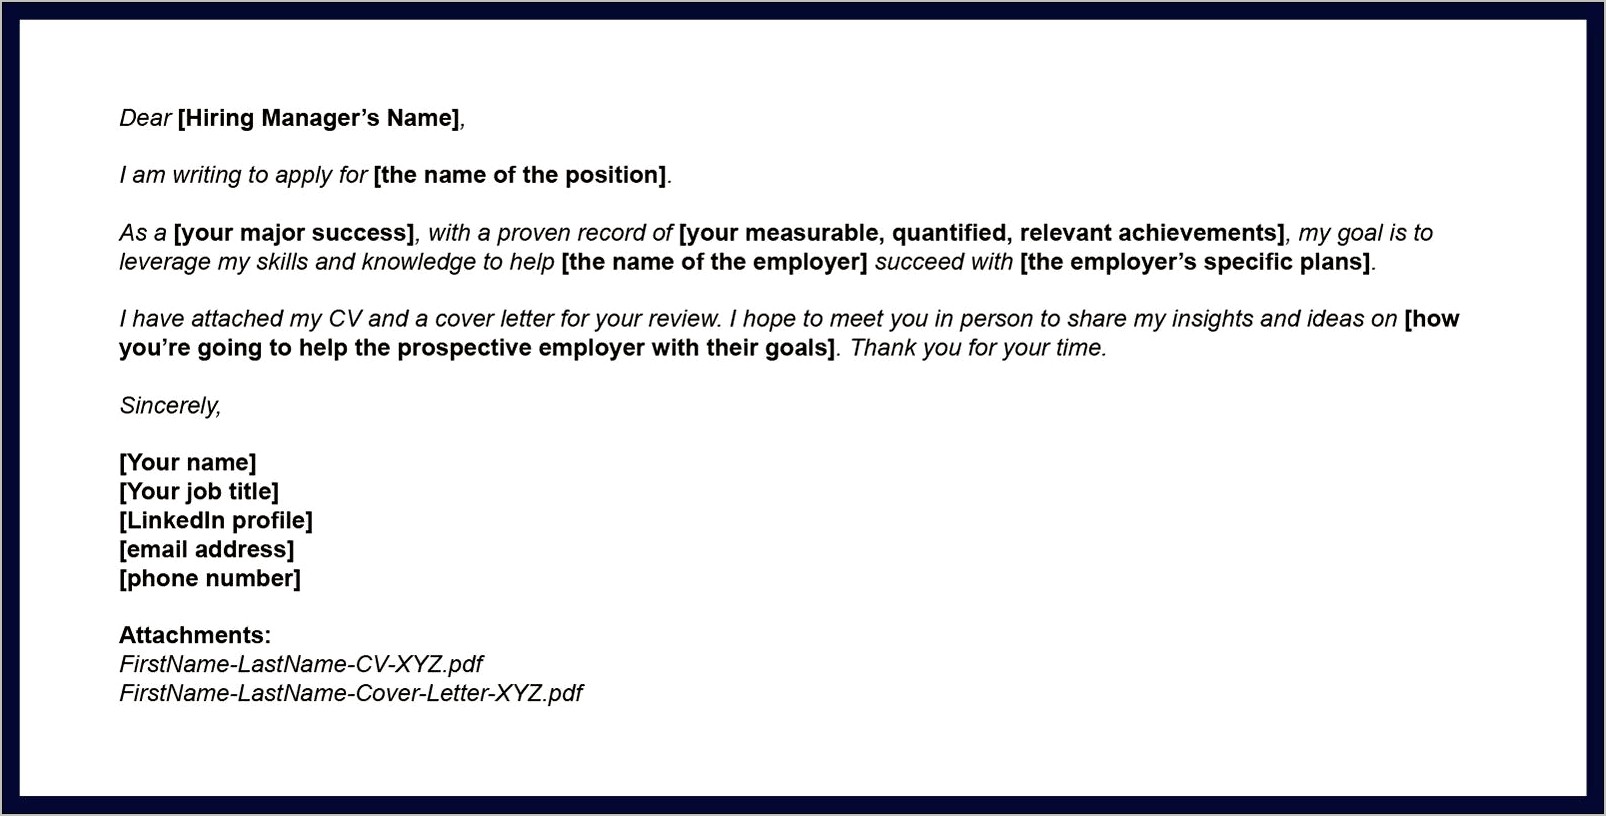 Email Resume For Job Posting